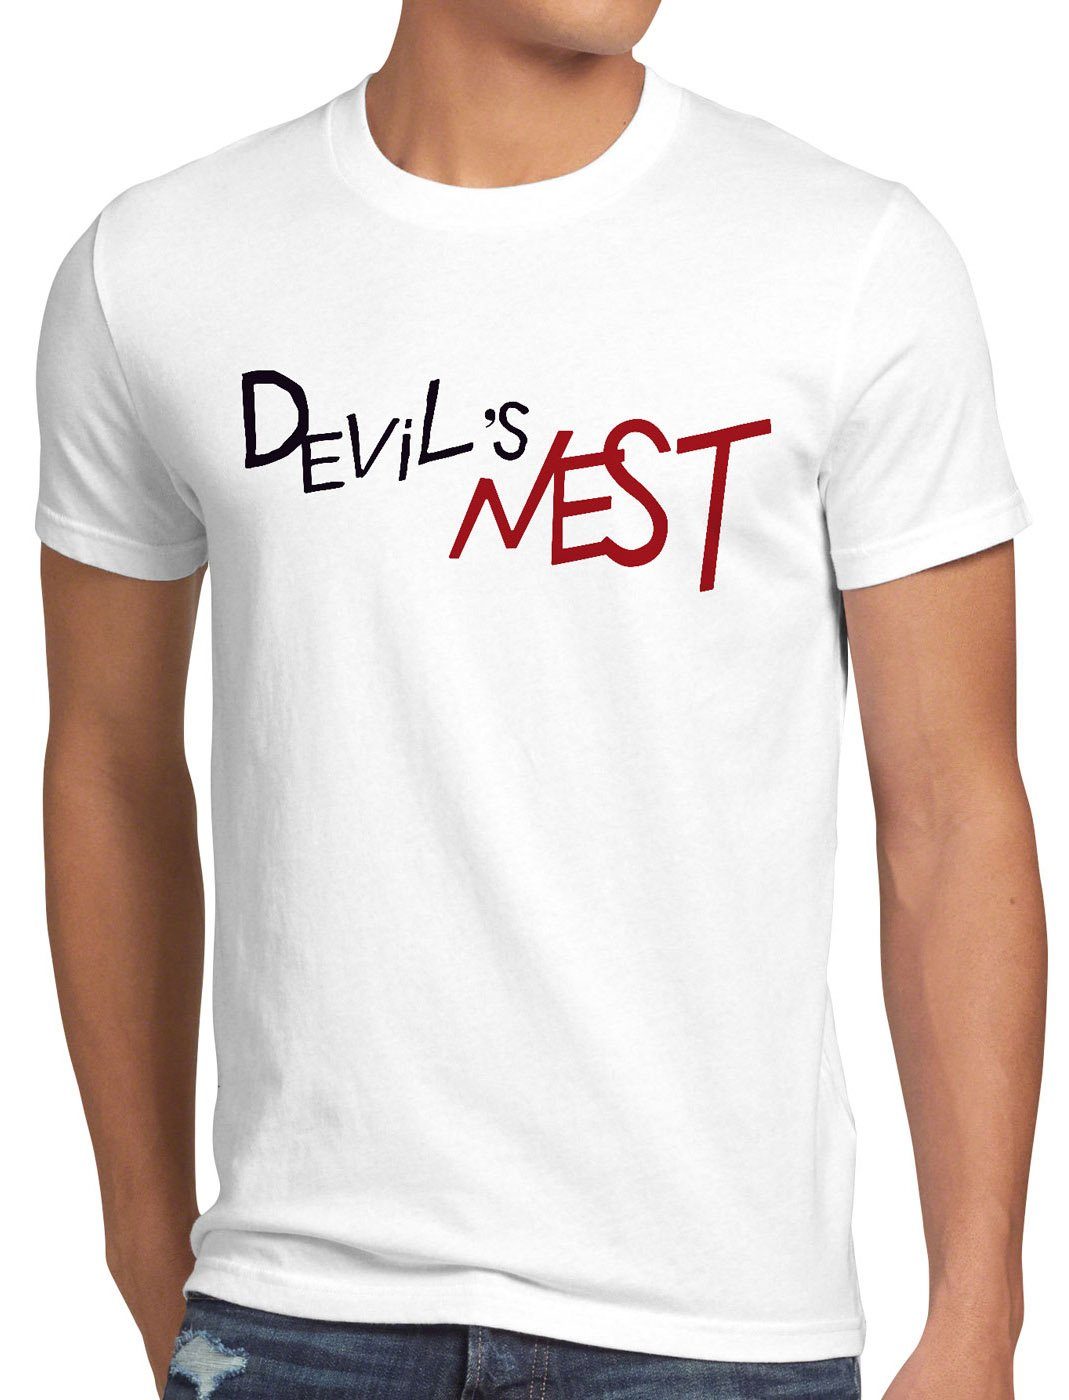 Anime Print-Shirt Cosplay Herren T-Shirt Kostüm Nest Fan-Shirt style3 Devils Jungen weiß Alchemist